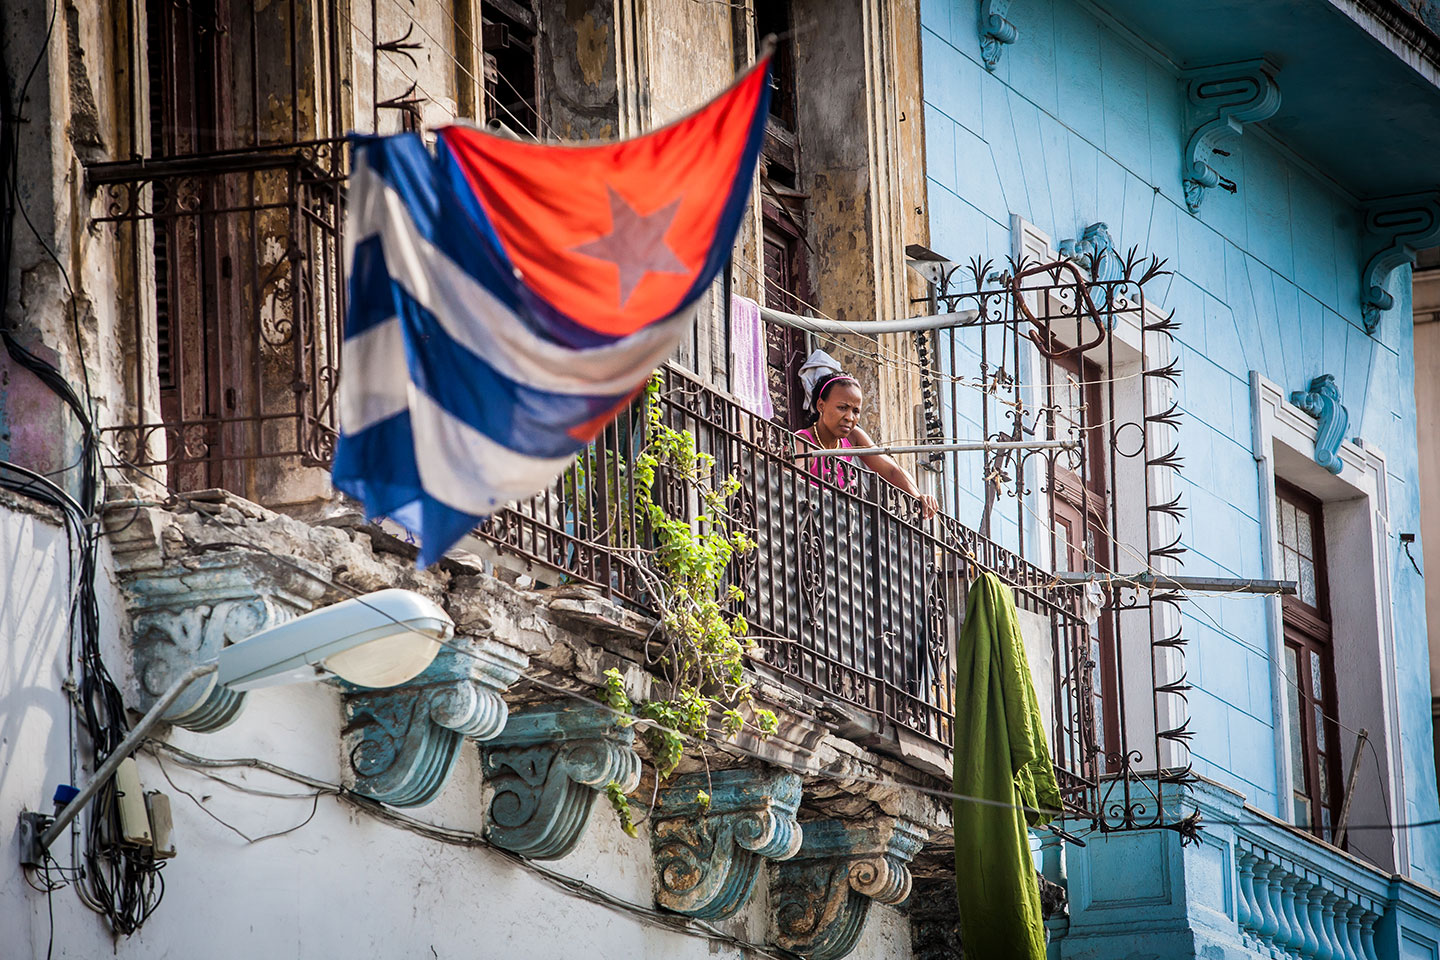 Cuban flag waiving proudly in Havana, Cuba